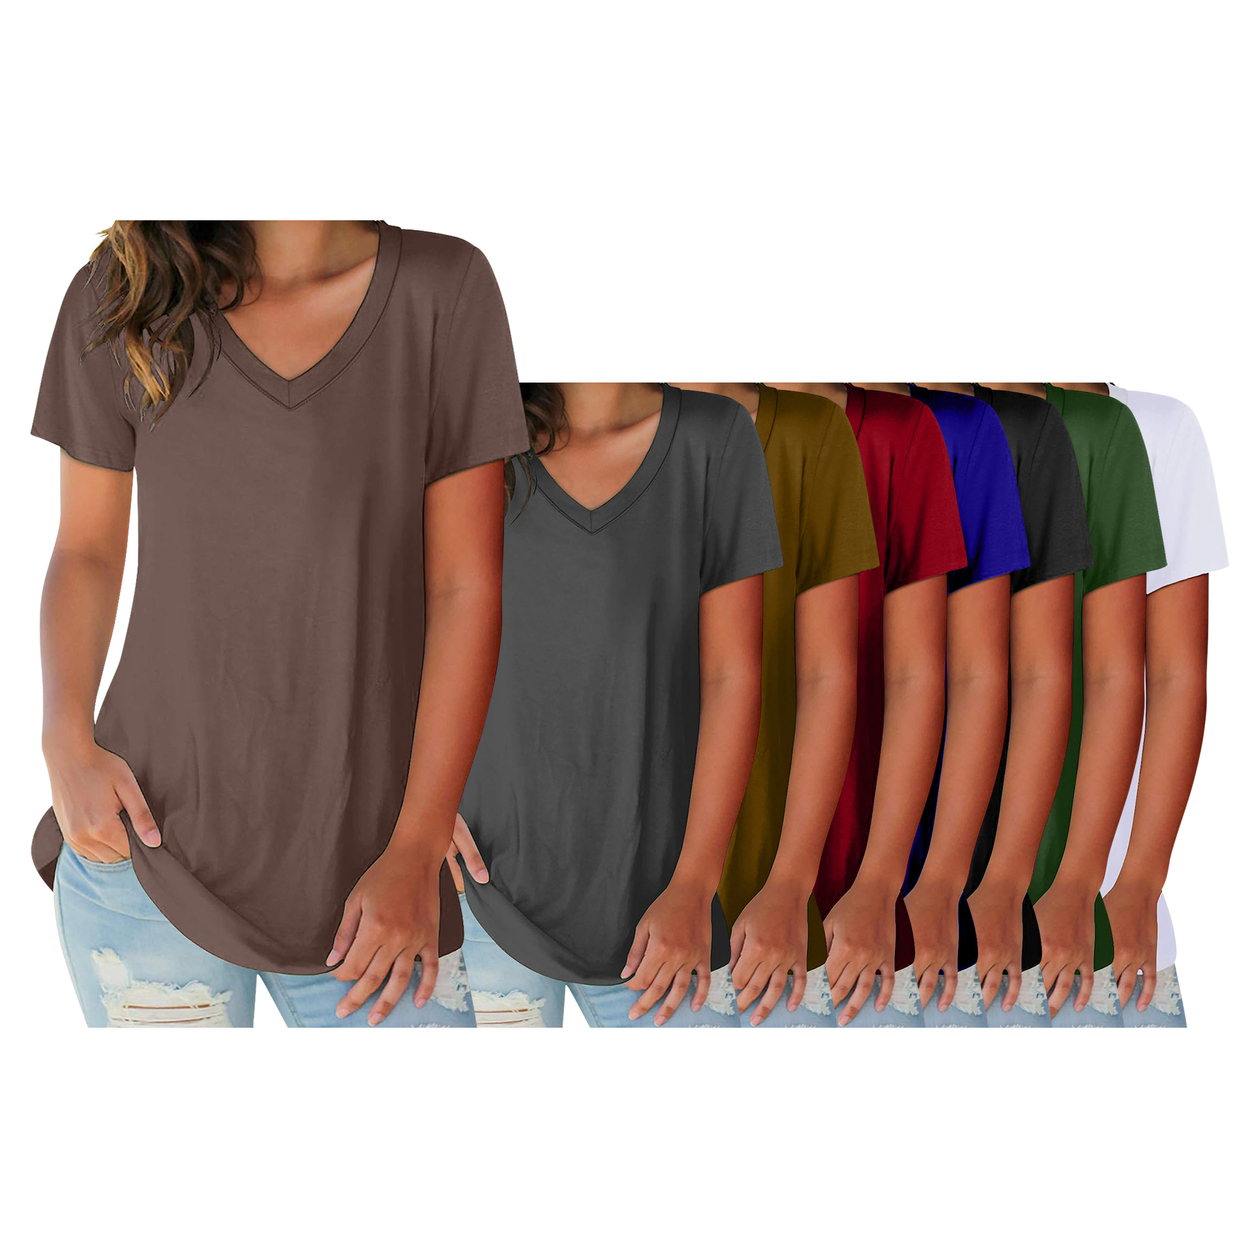 3-Pack: Women's Ultra Soft Smooth Cotton Blend Basic V-Neck Short Sleeve Shirts - Black, Navy, Grey, X-large